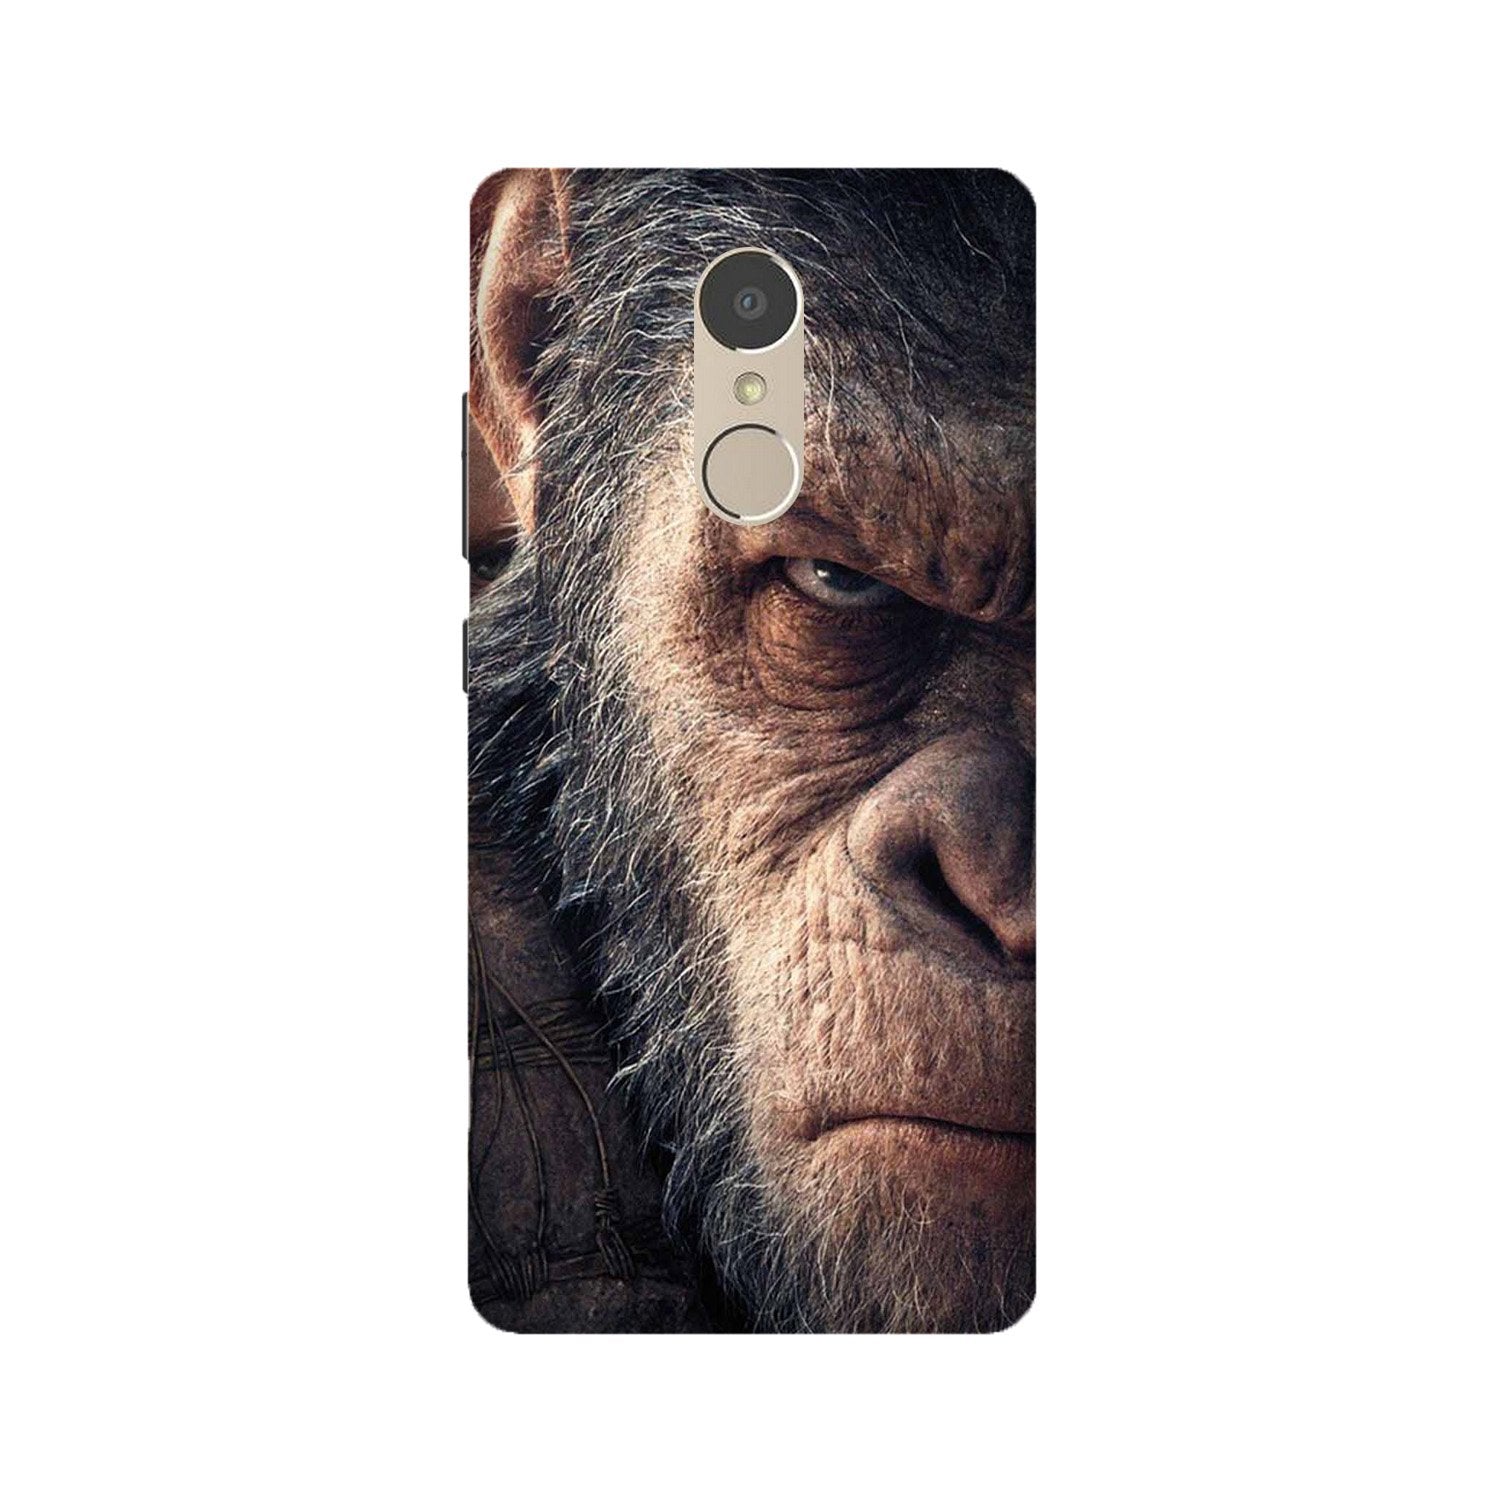 Angry Ape Mobile Back Case for Lenovo K6 Note (Design - 316)